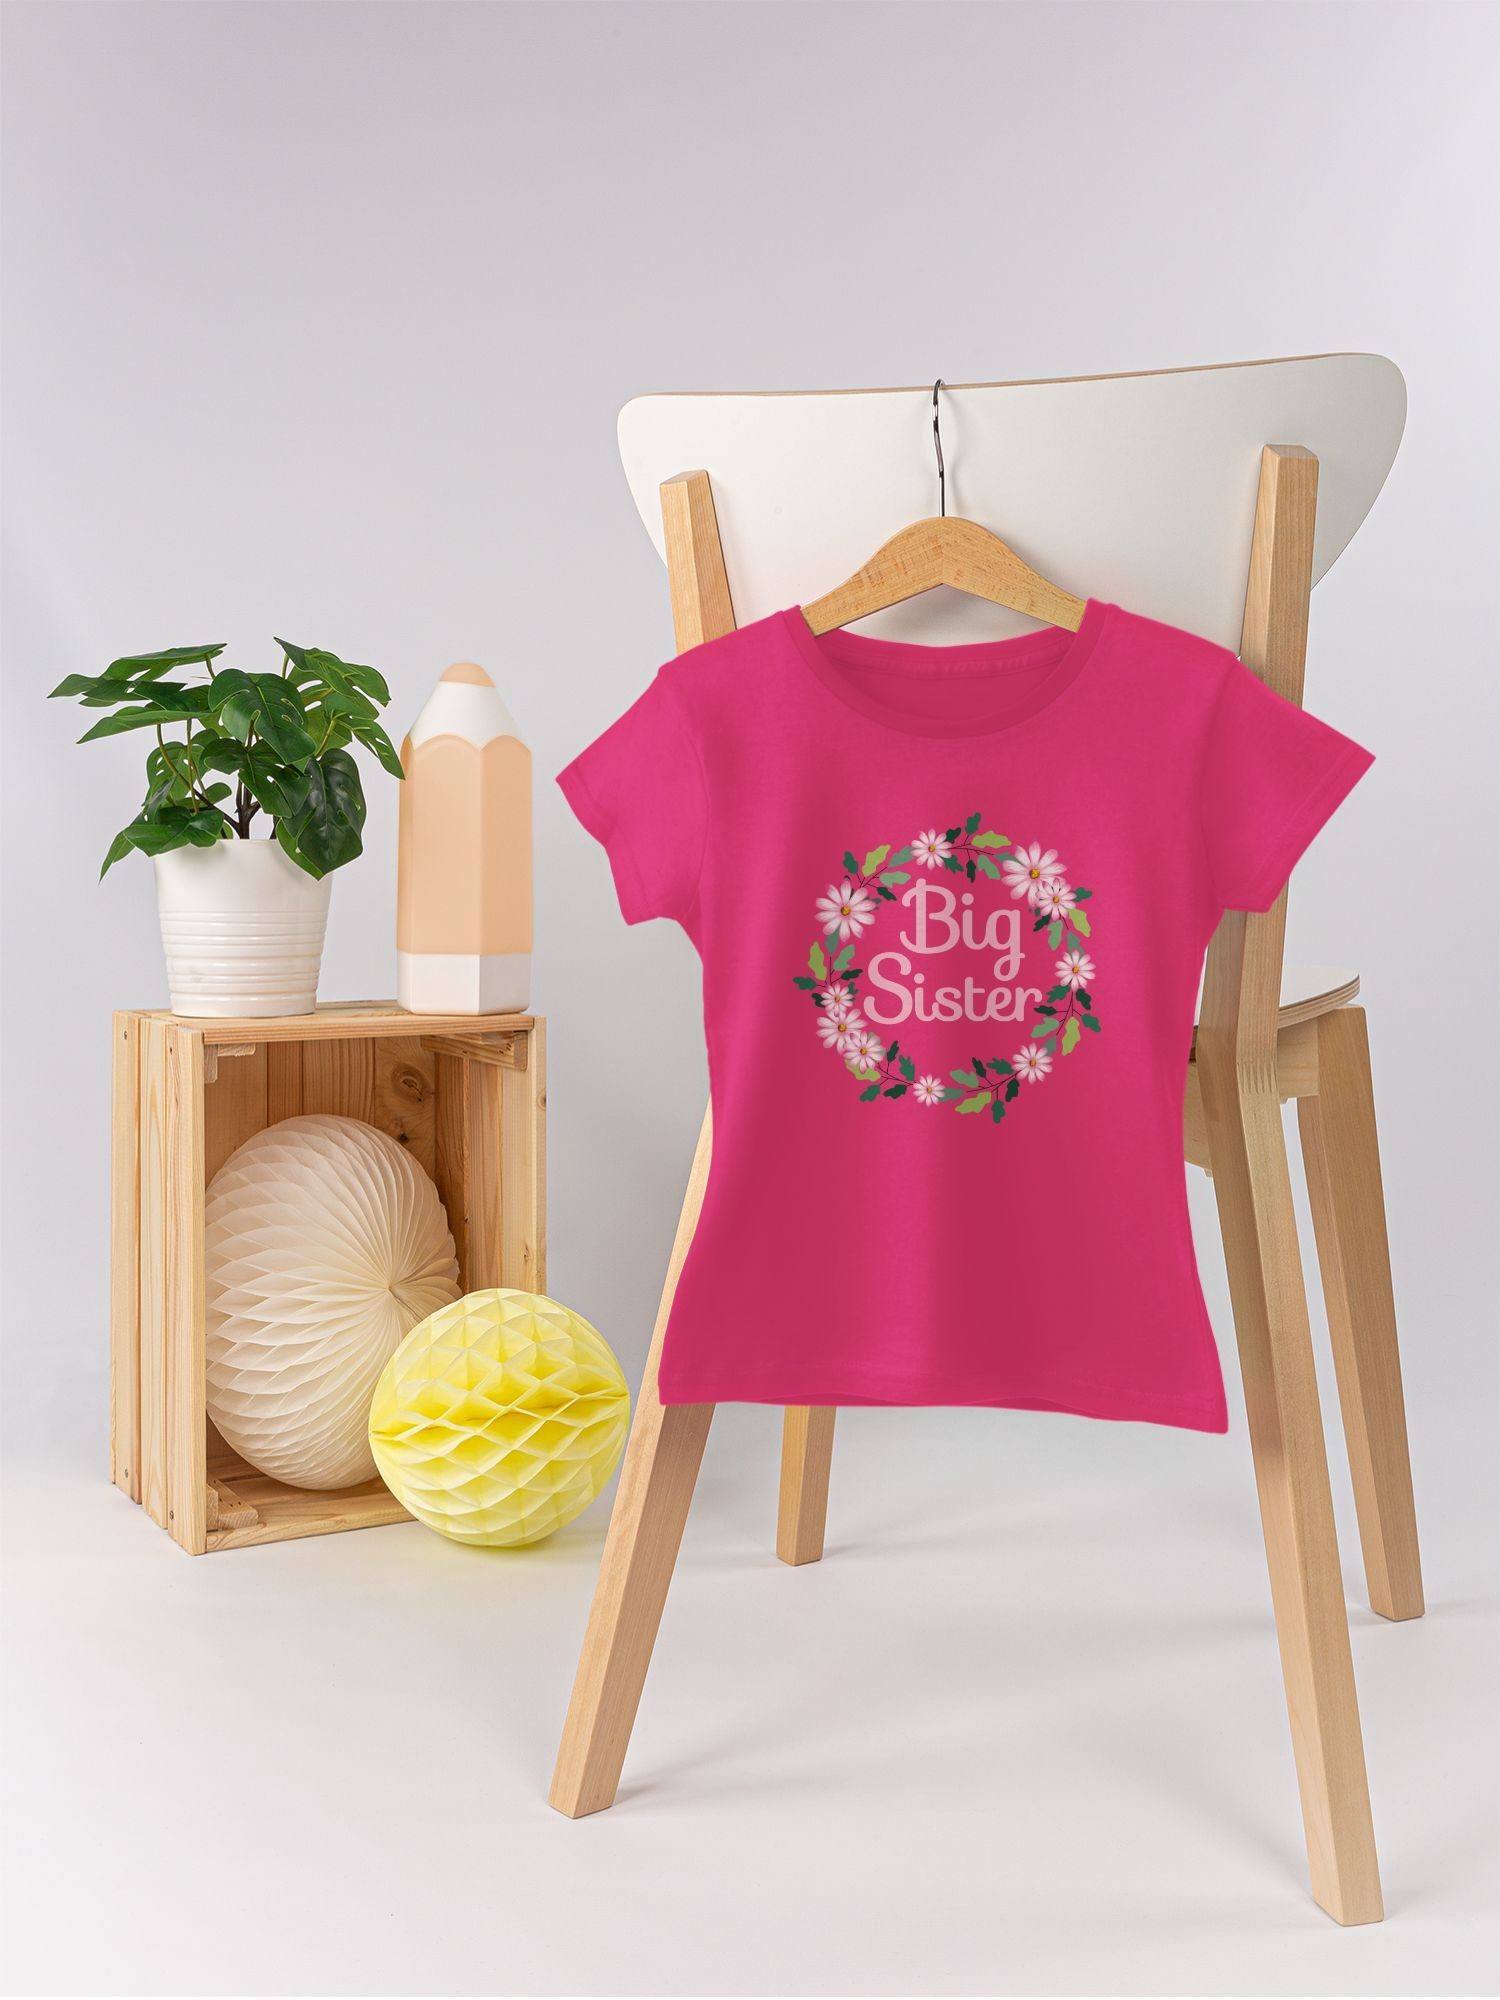 T-Shirt Geschenk Fuchsia Geschwister mit Shirtracer Sister Schwester Blumenkranz 2 Big